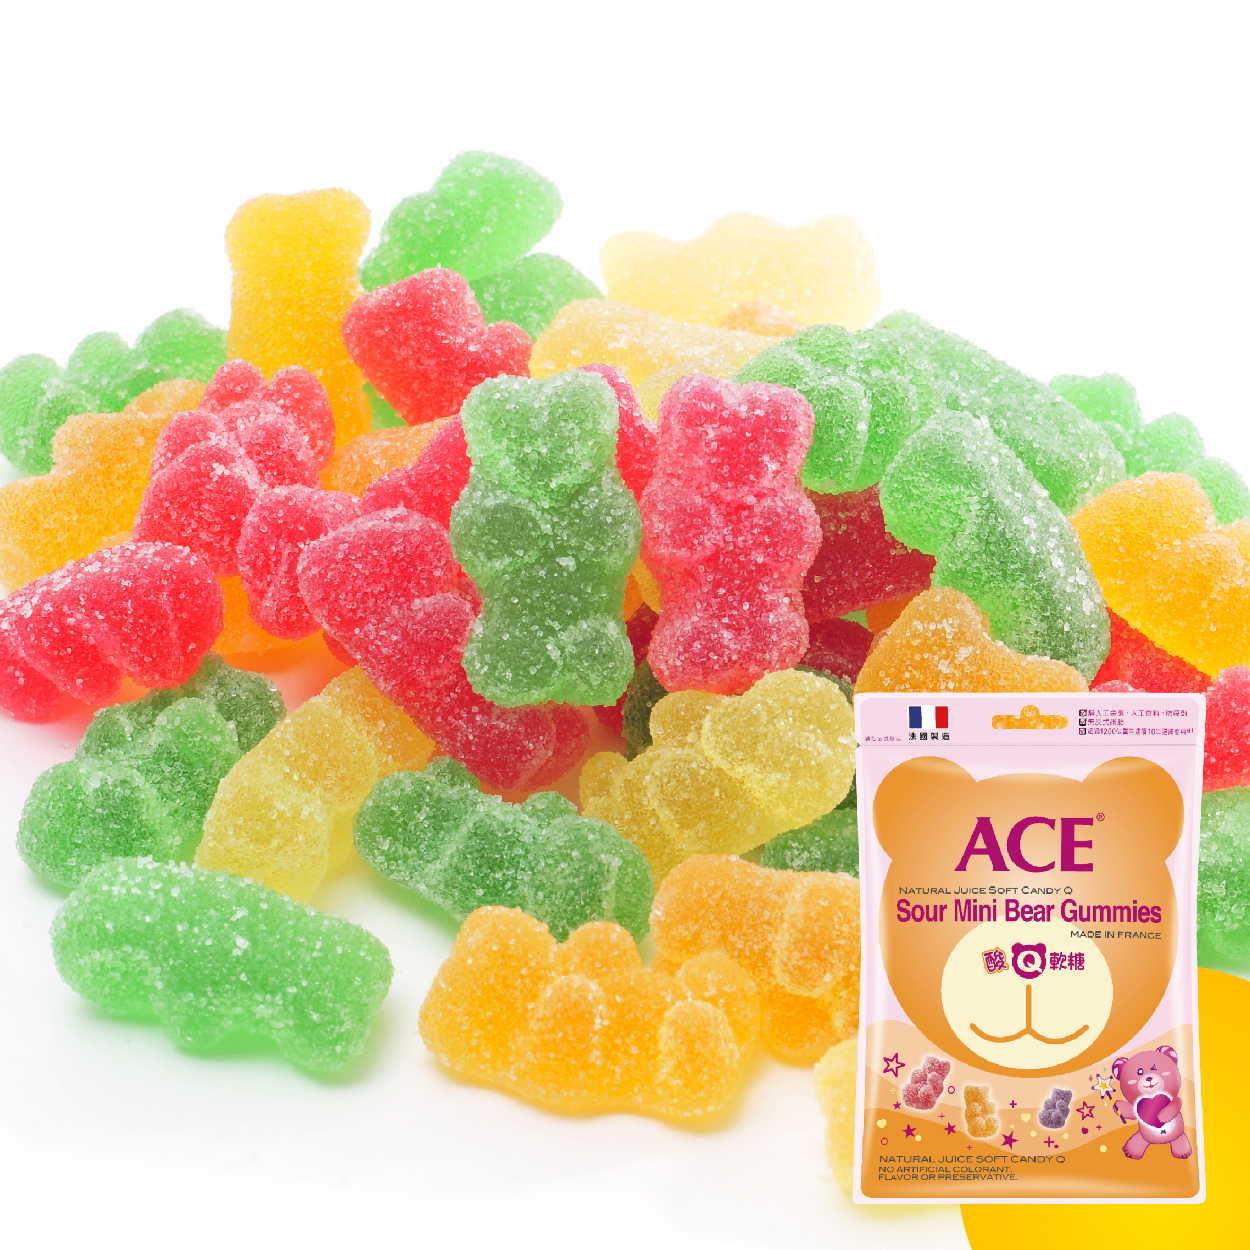 ACE 酸Q熊軟糖 媽媽心目中的軟糖首選品牌——法國浪漫與安心的存在